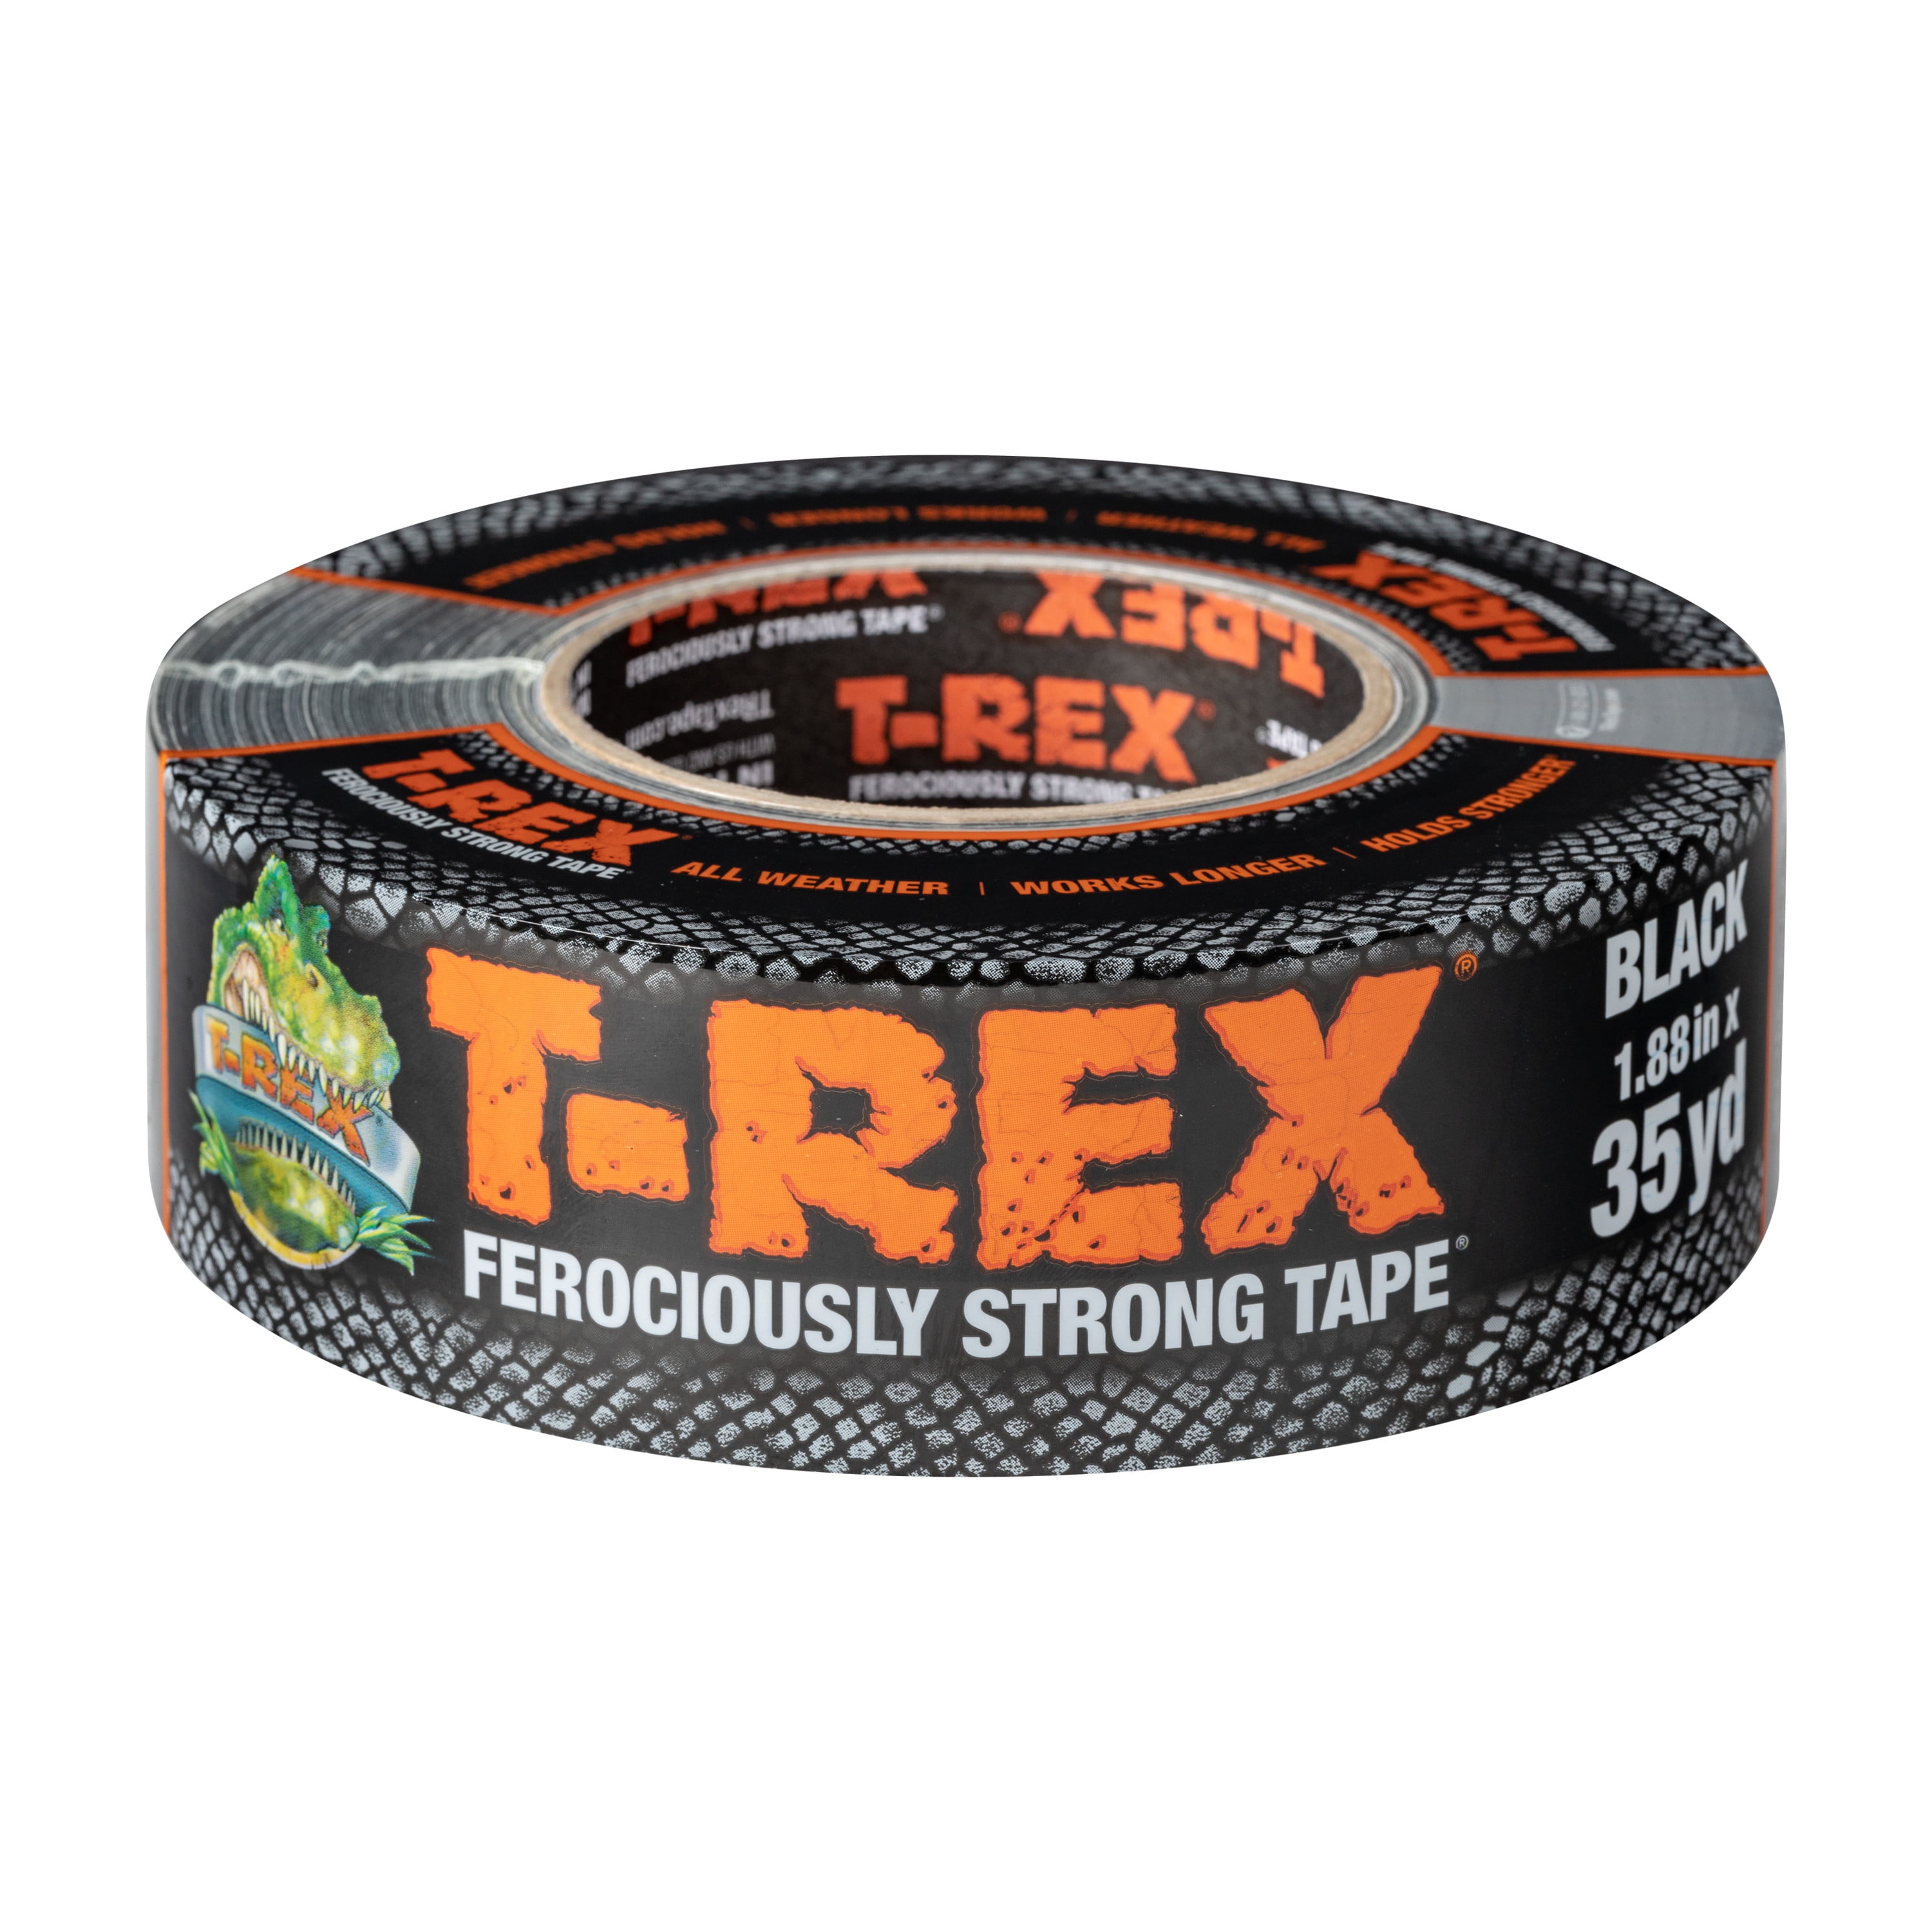 T-Rex Ferociously Strong Duct Tape 1.88 in Dark Gunmetal Gray x 35 yd 1 Roll 